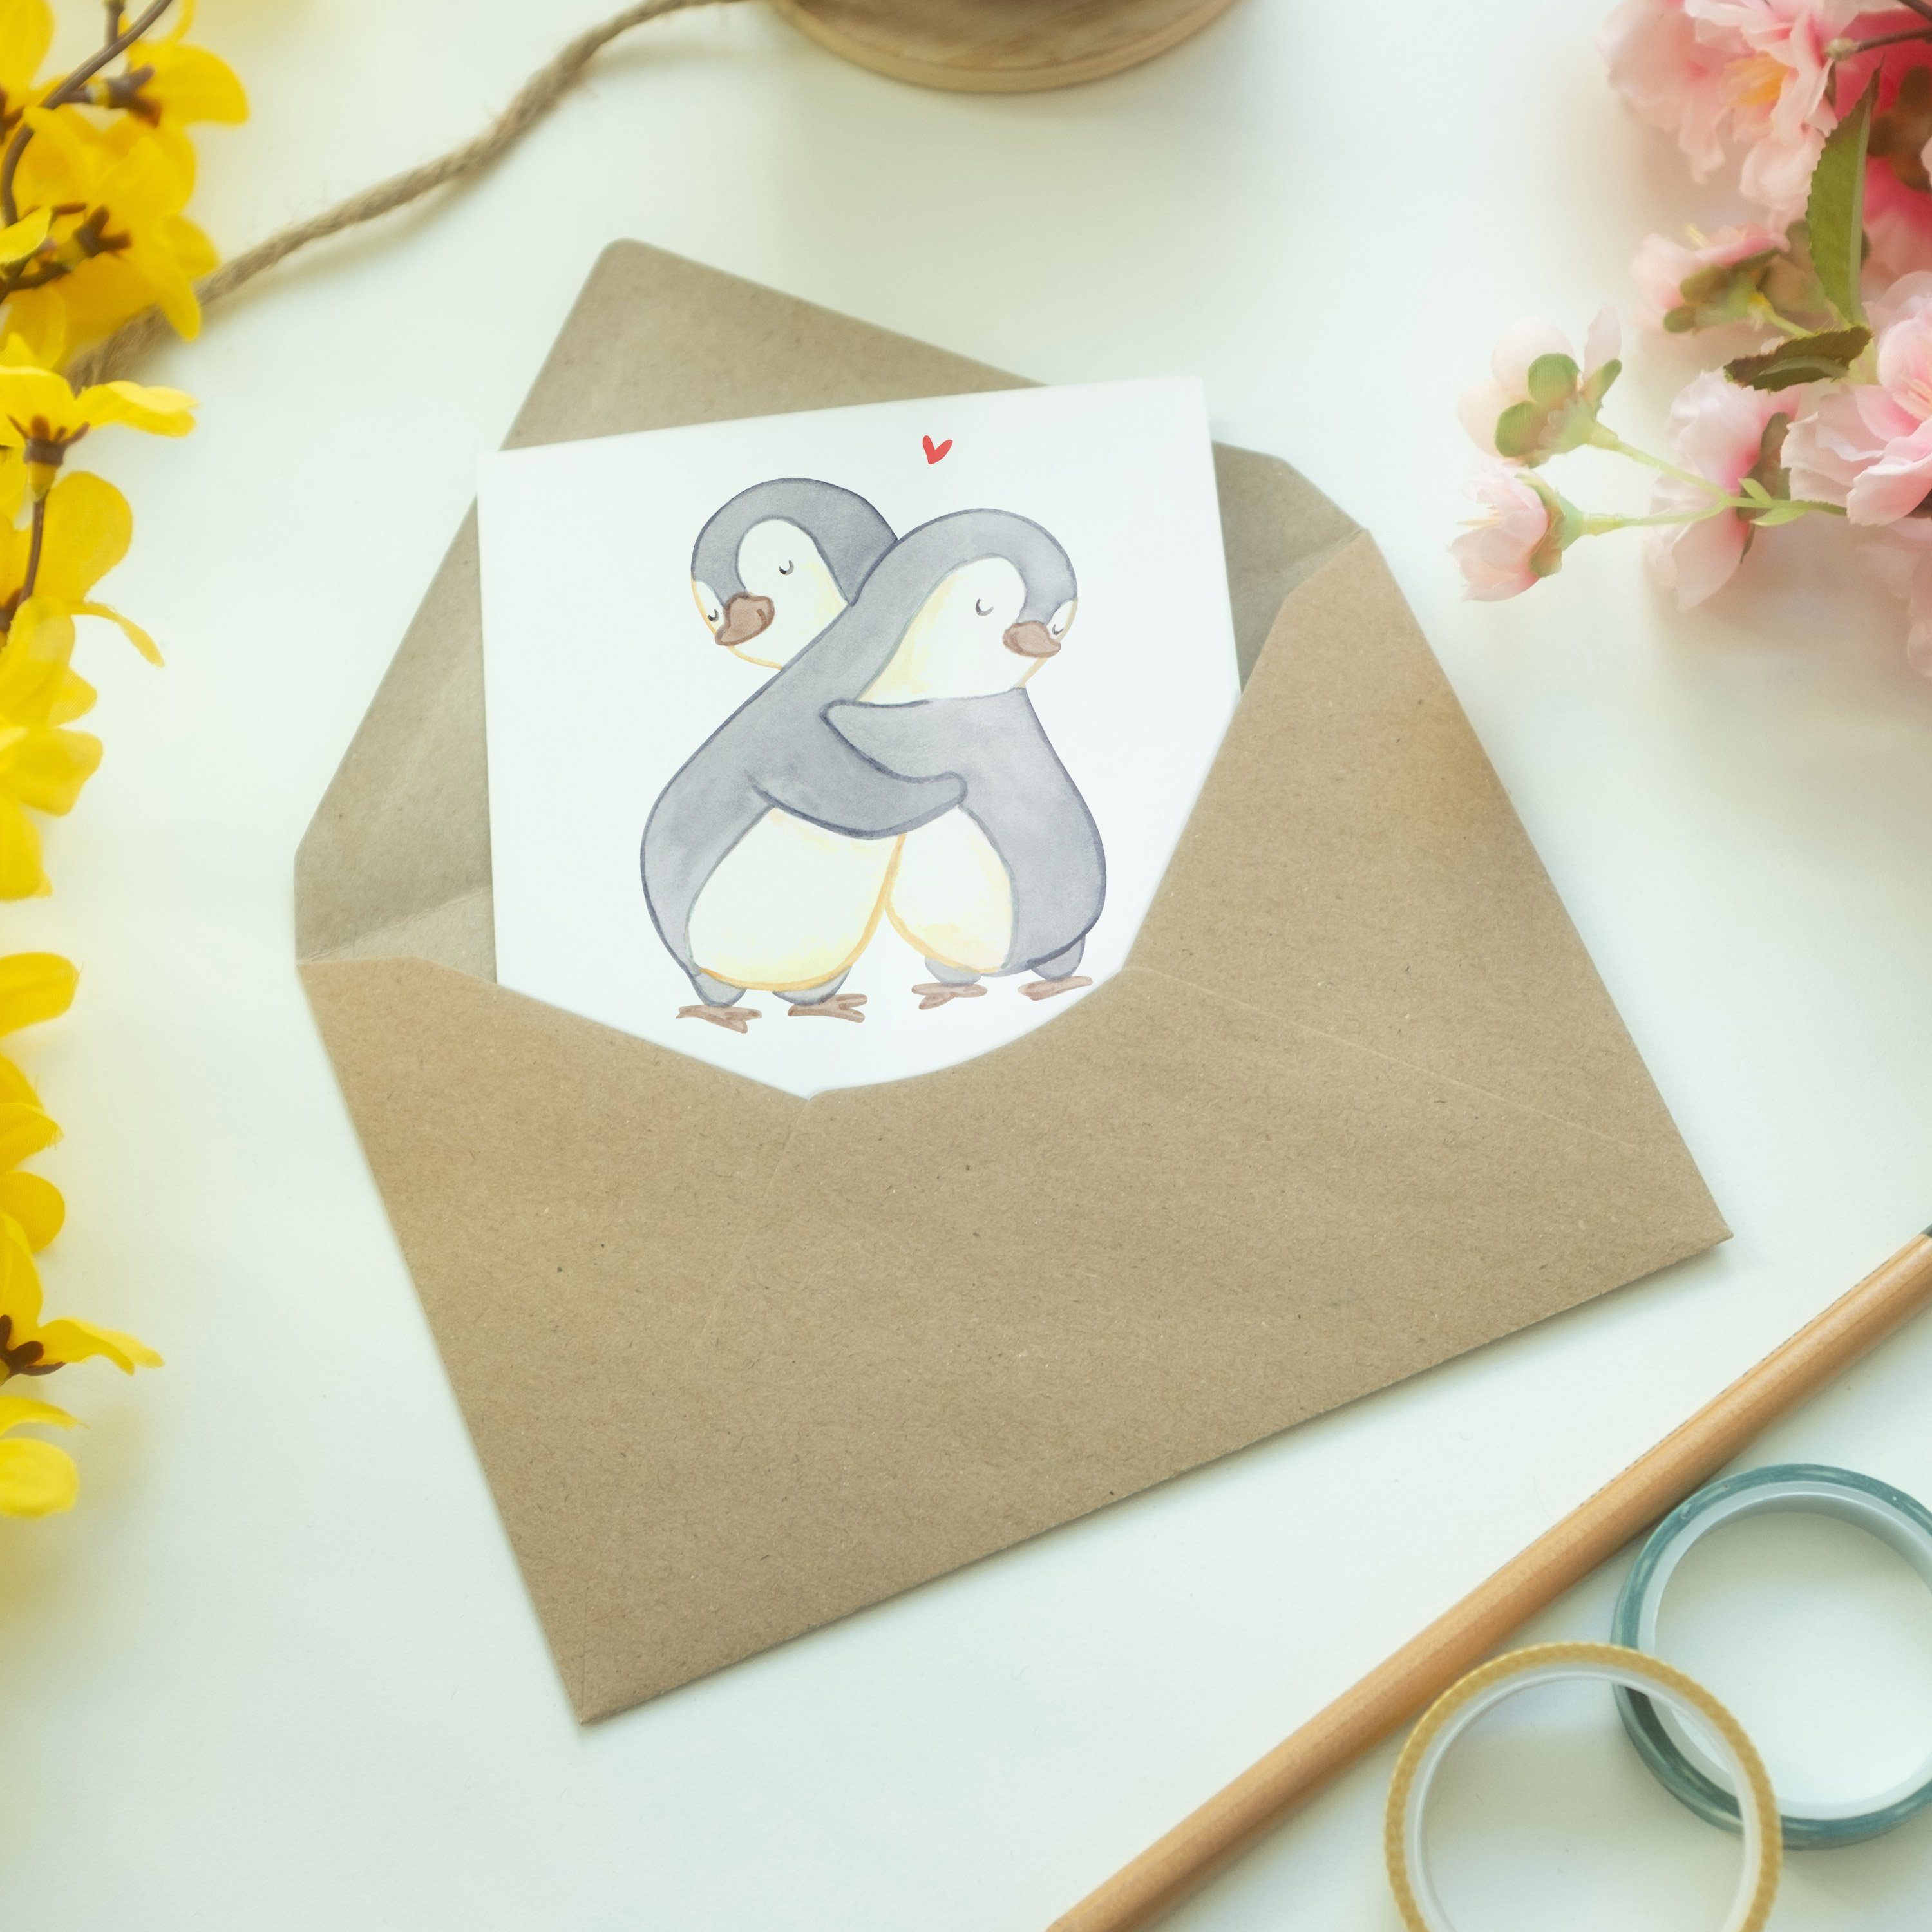 Grußkarte Panda Geschenk, Weiß - Geschwister S - & Mr. Beste Geschenktipp, Mrs. Welt Pinguin der